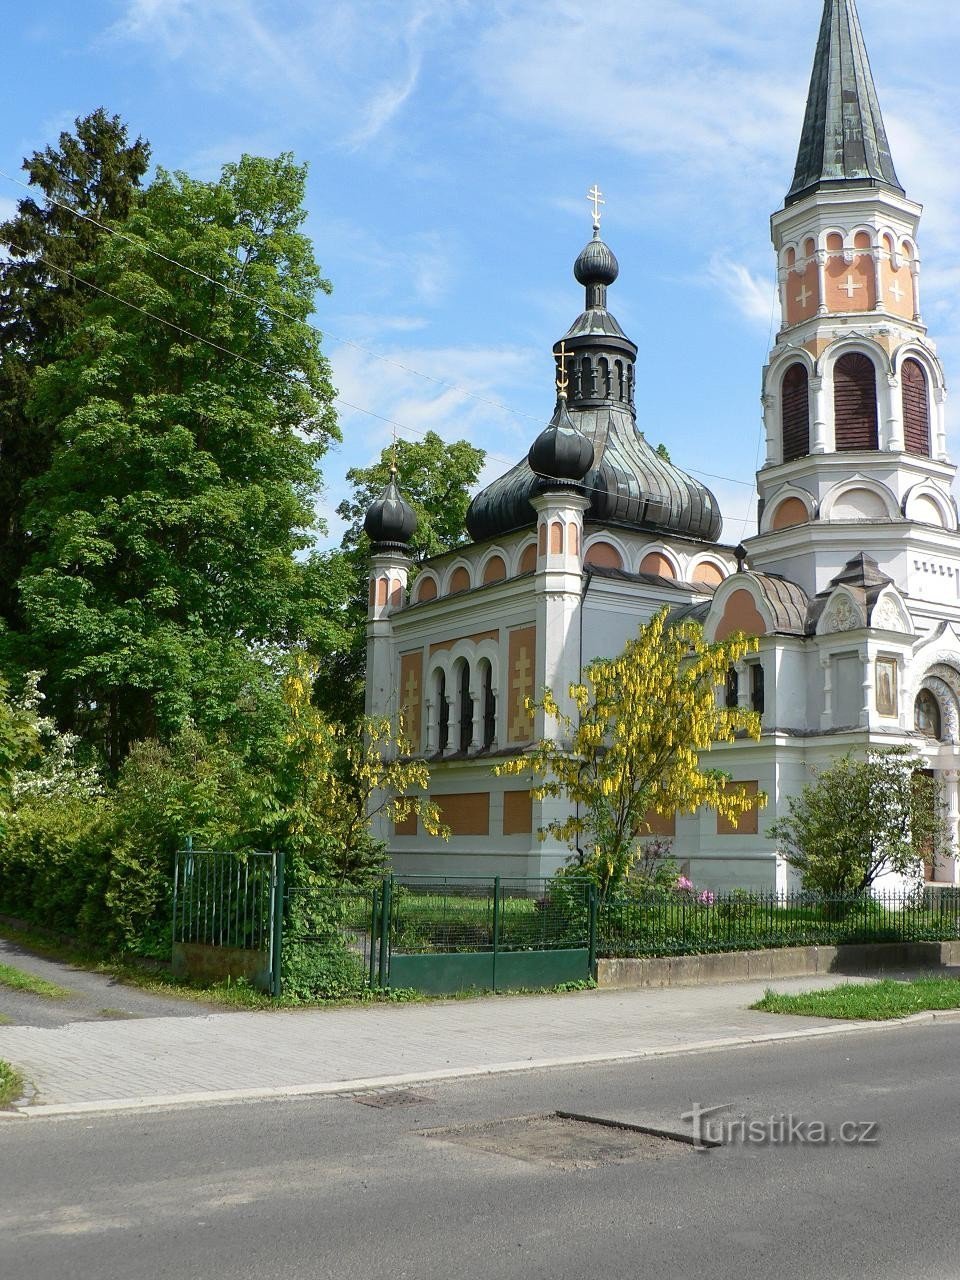 Františkovy Lázně, dome of the church of St. Olga